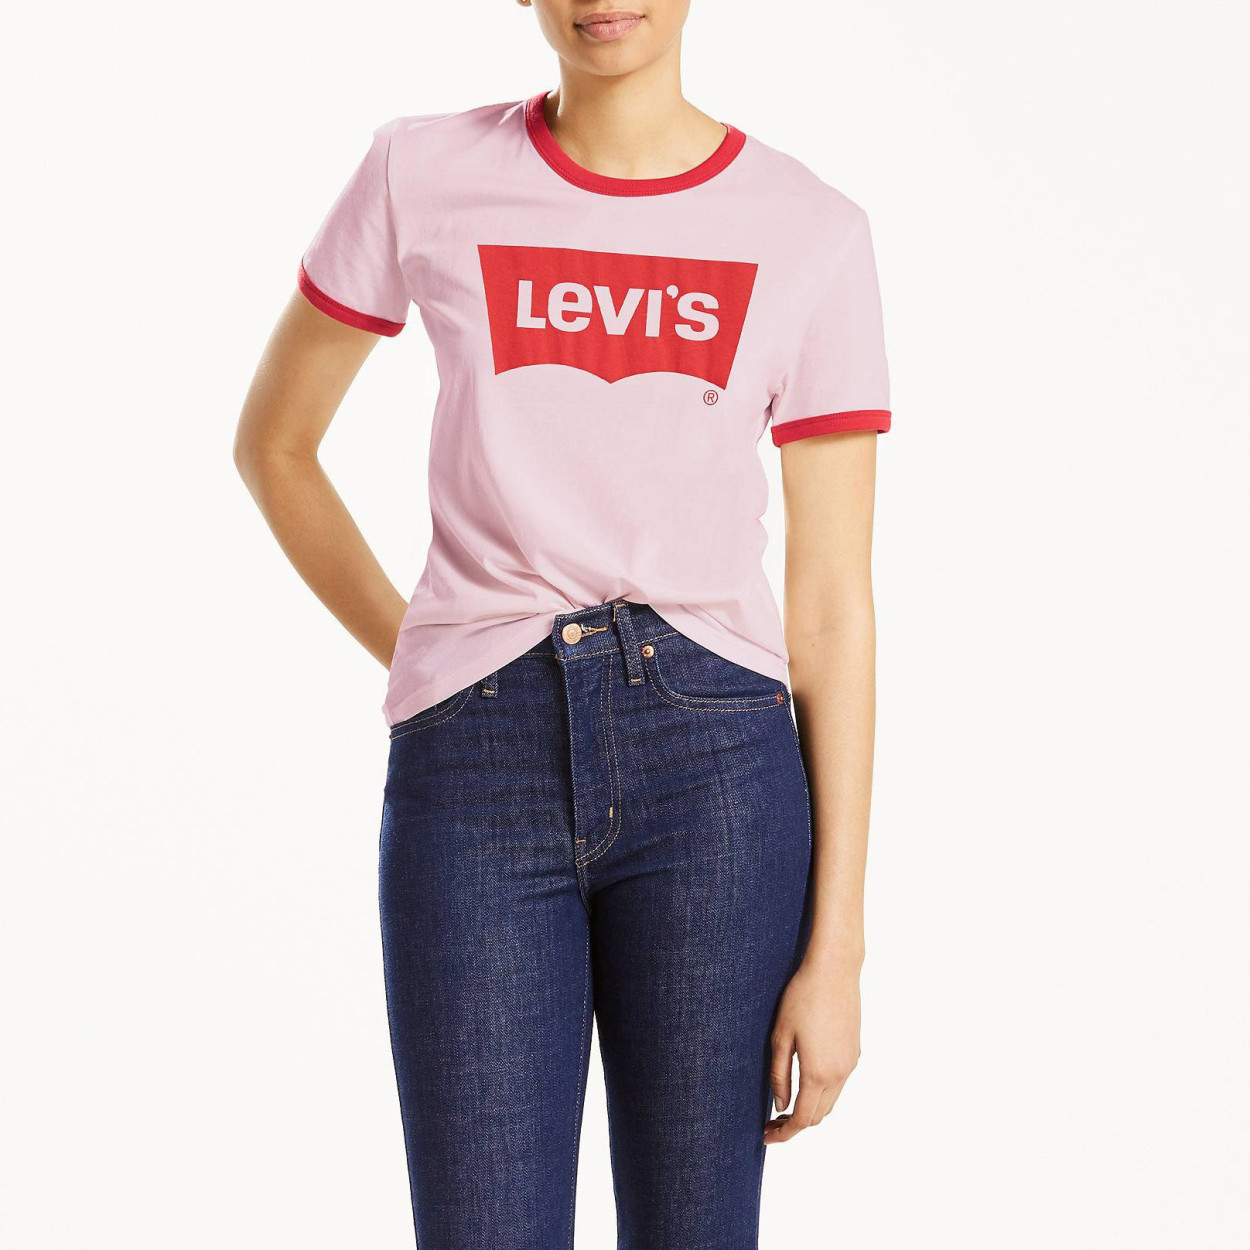 levi's t shirt original